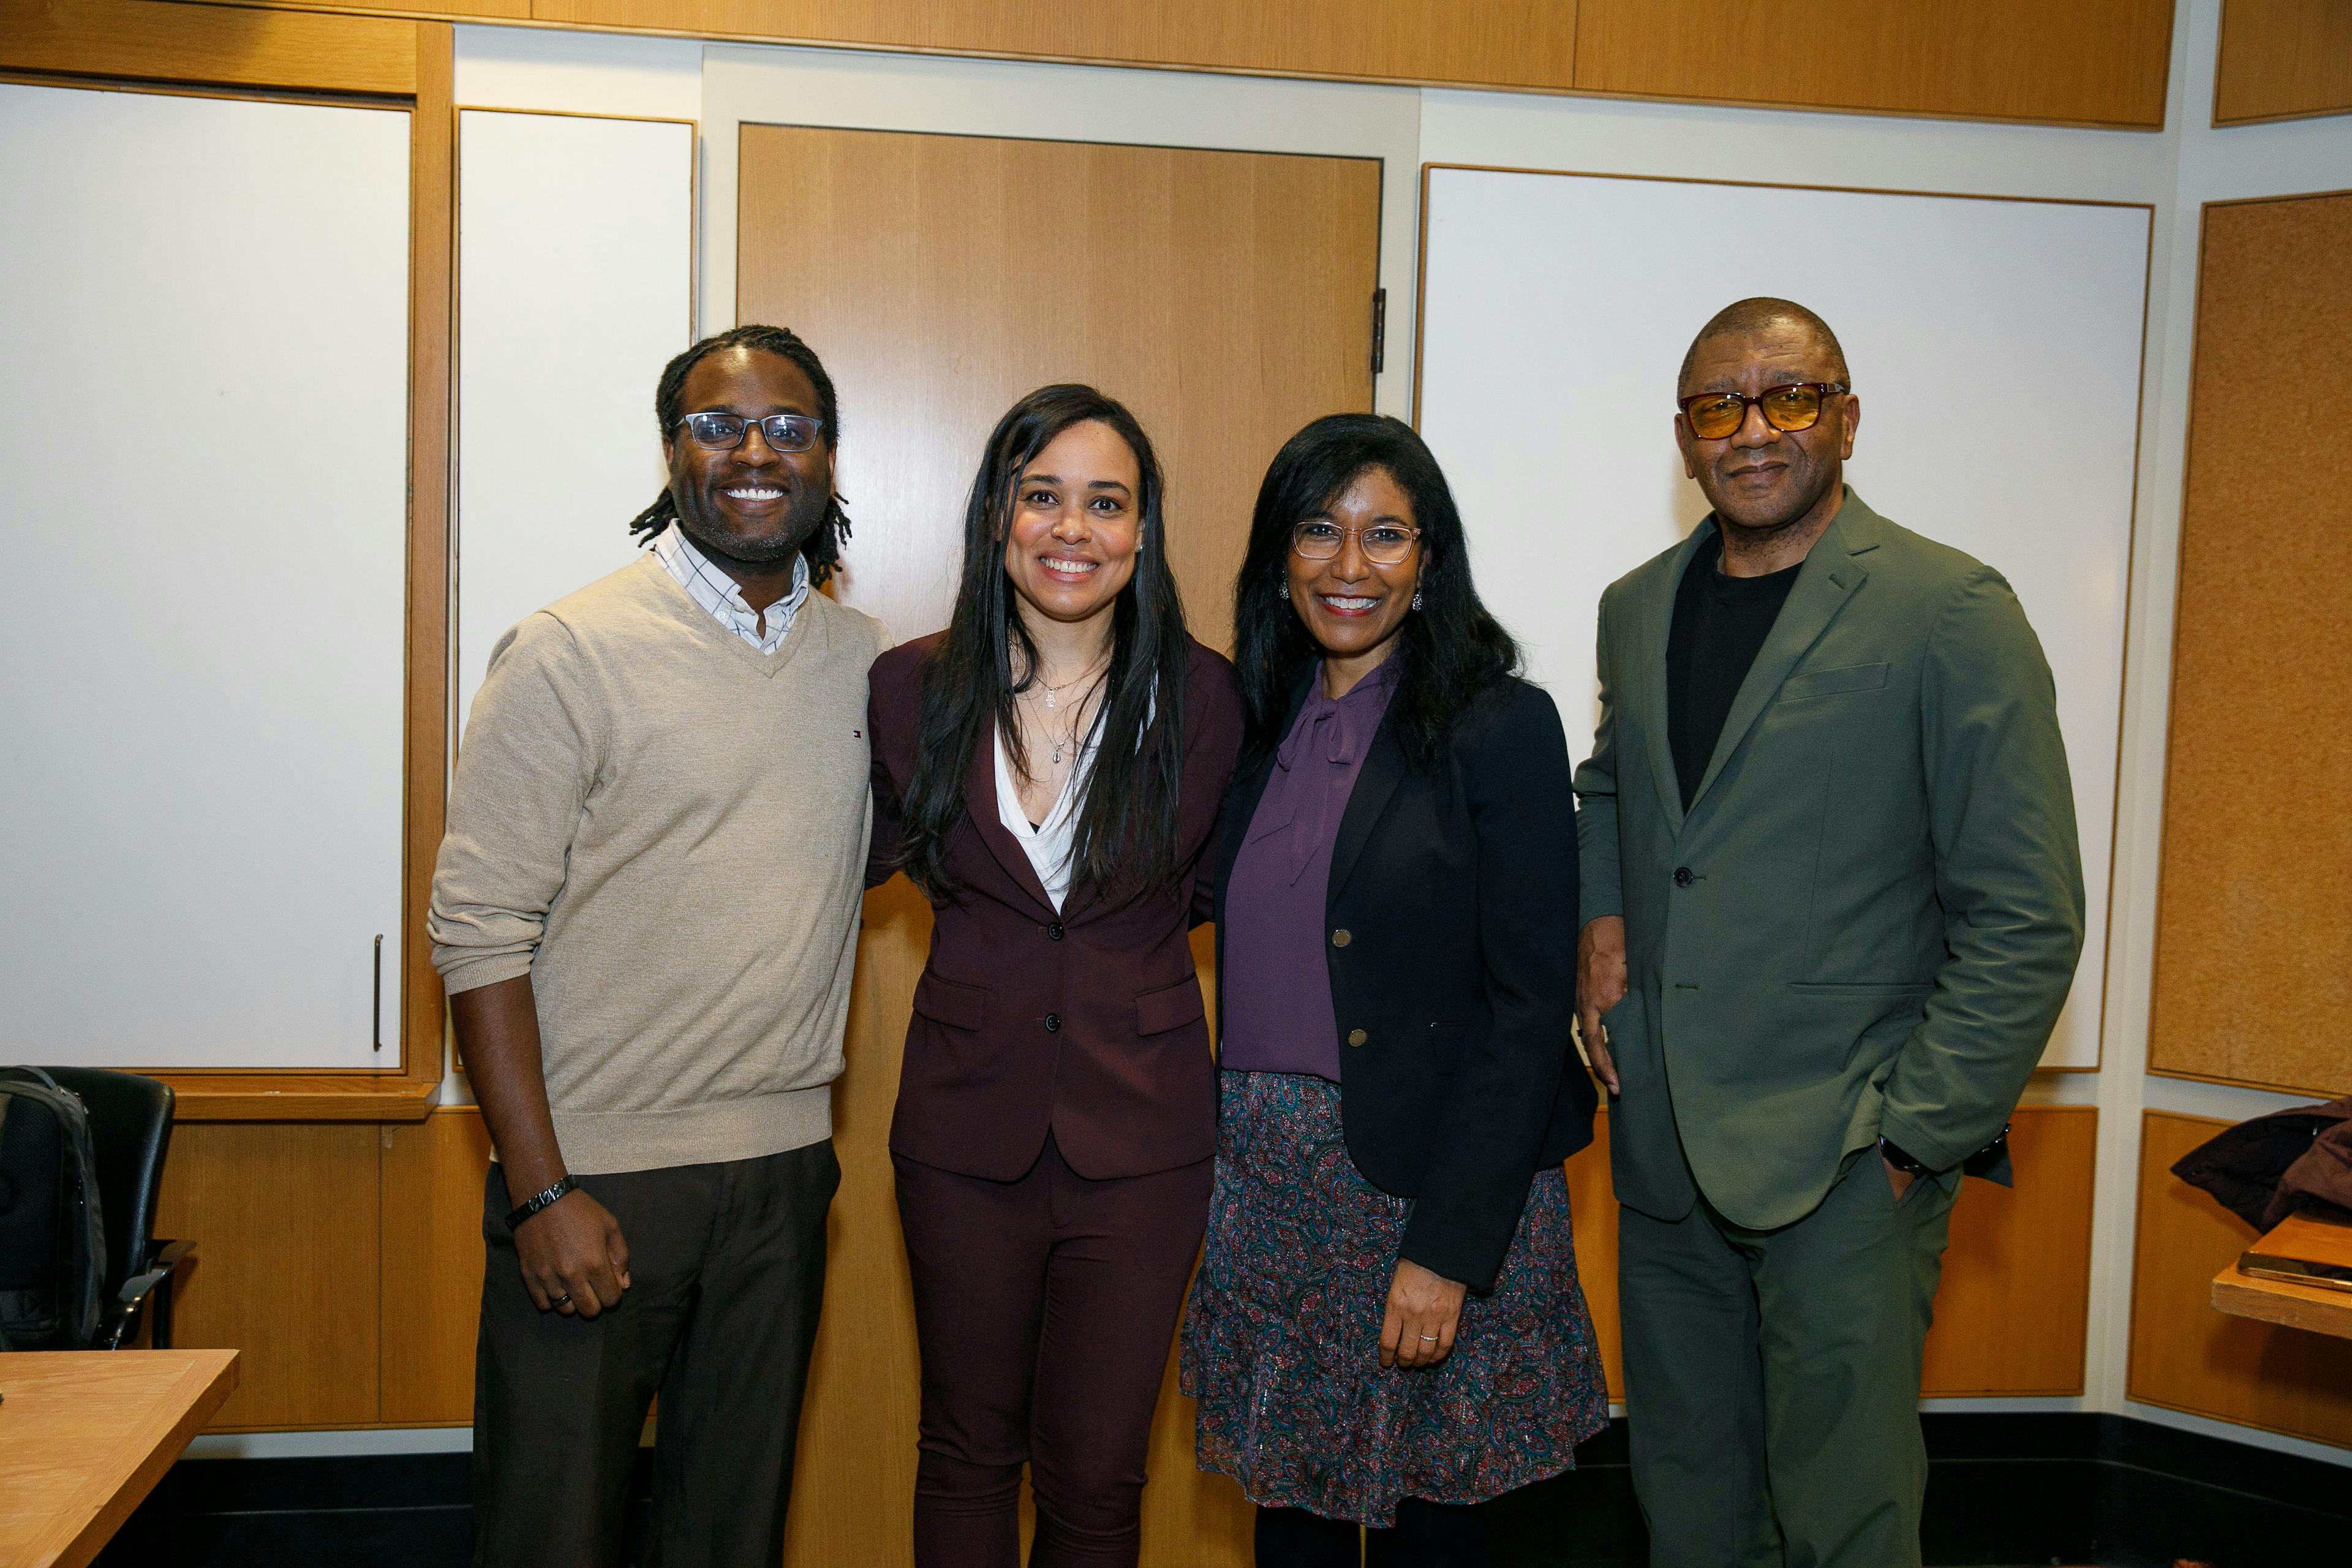 From left to right: Terrell Holloway, MD; Amanda J. Calhoun, MD, MPH; Carolyn Roberts, PhD; and Howard Stevenson, PhD.